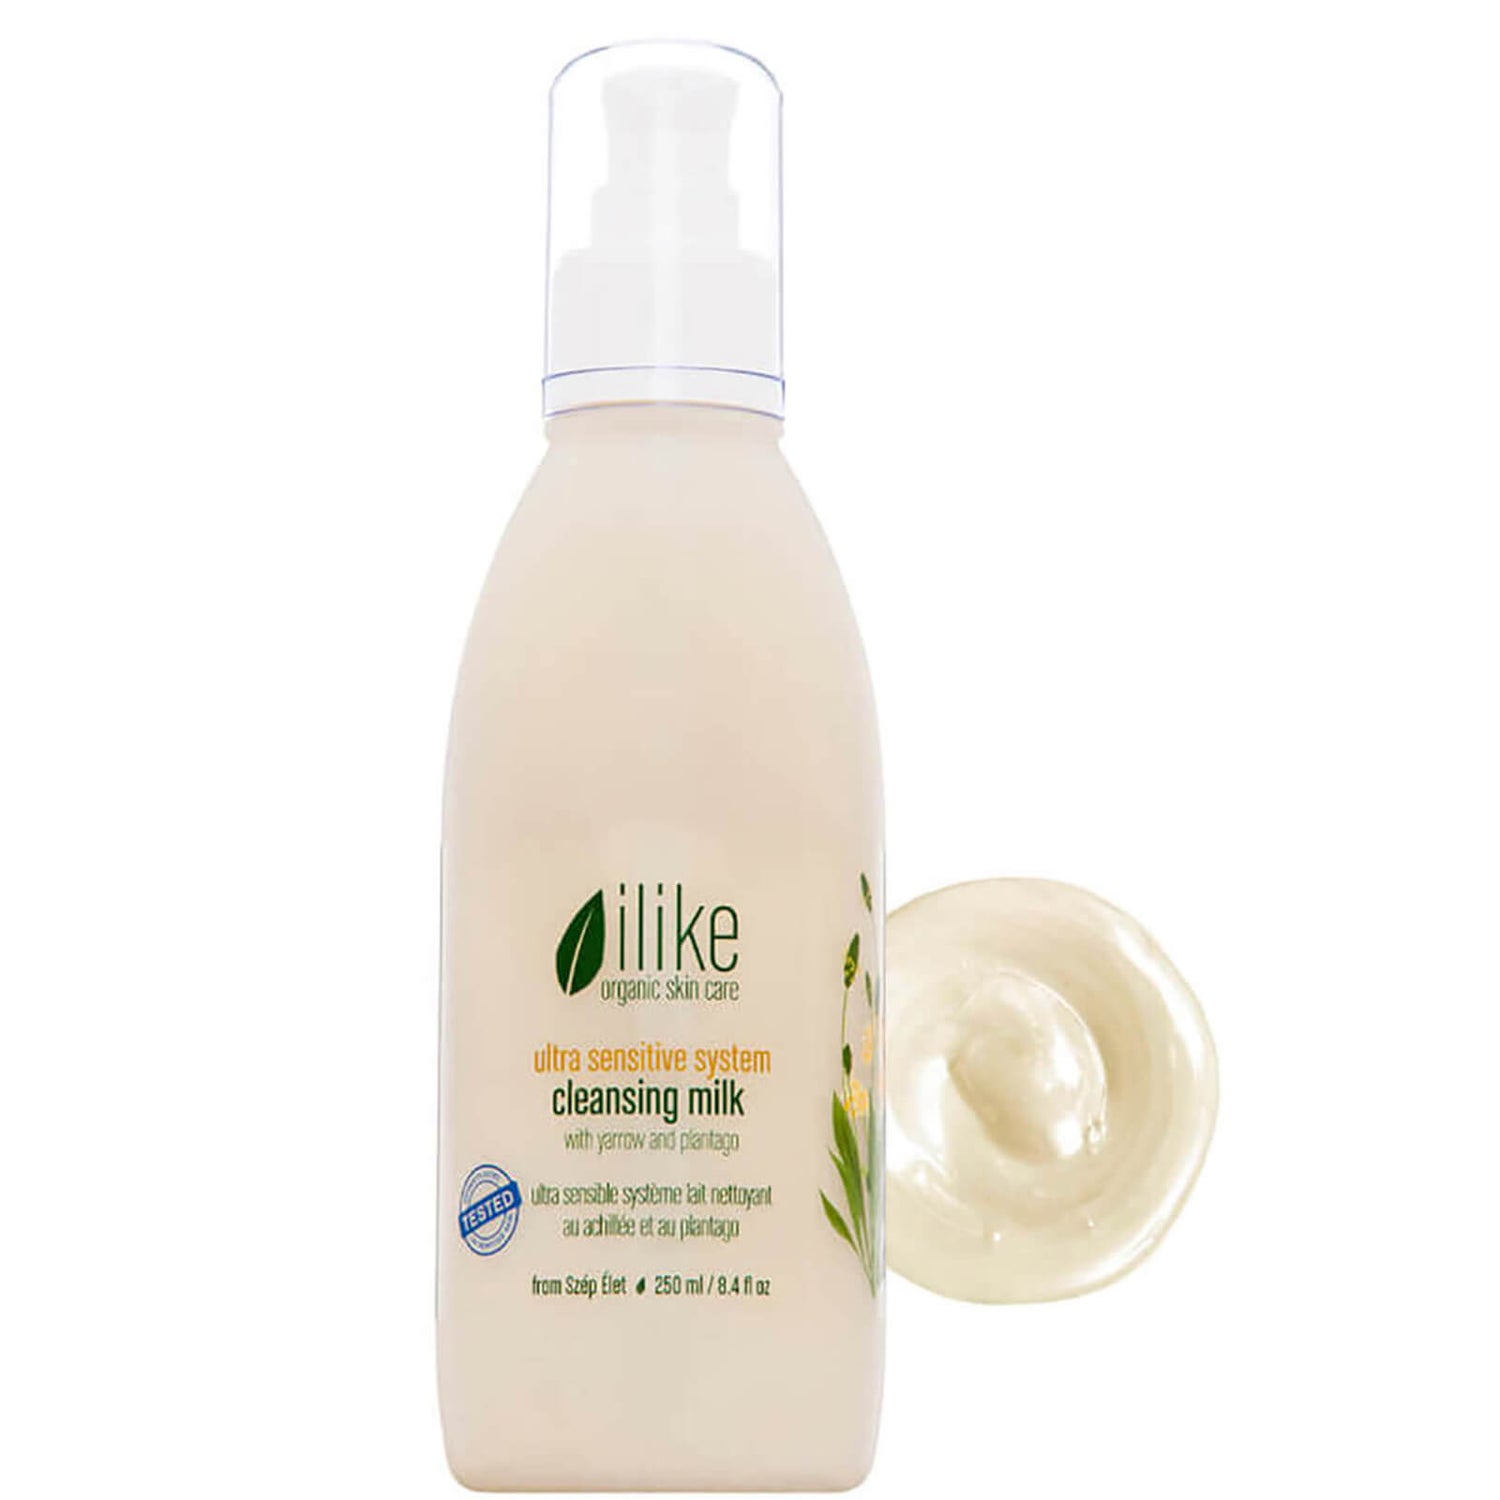 ilike organic skin care Ultra Sensitive System Cleansing Milk (6.8 fl. oz.)